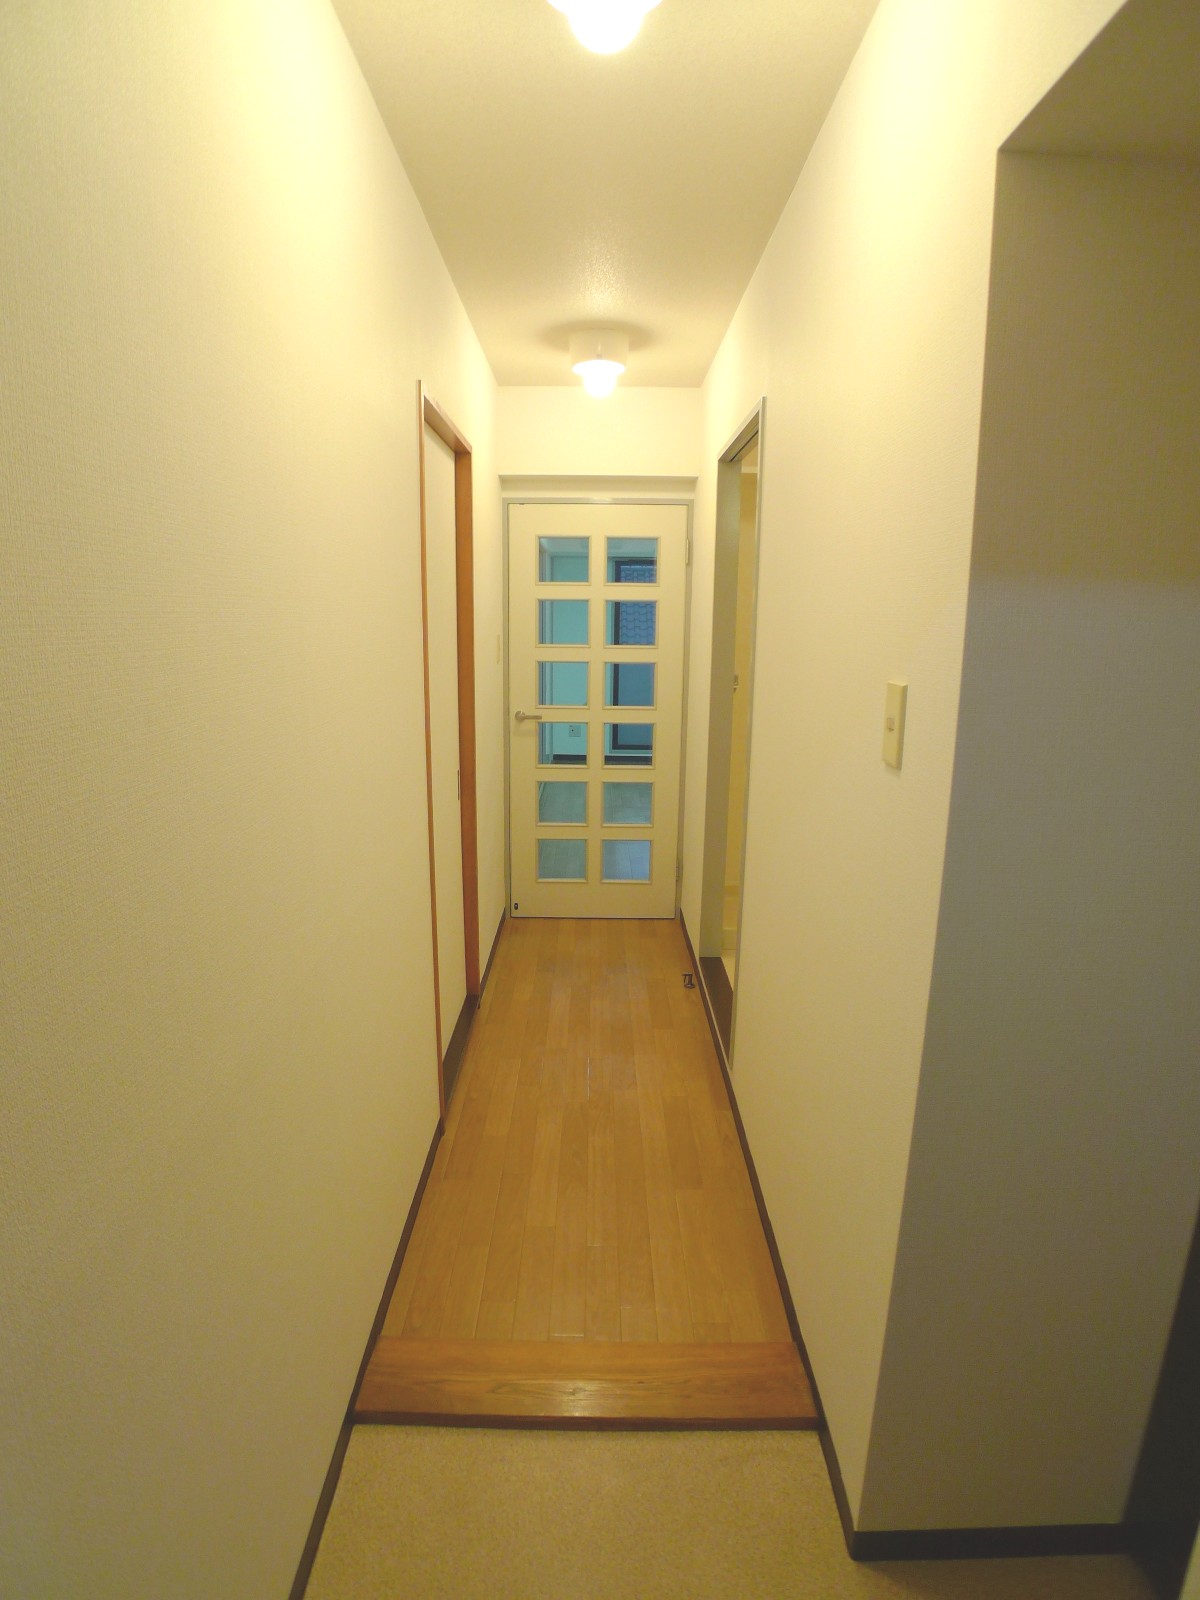 Entrance. Popular entrance corridor